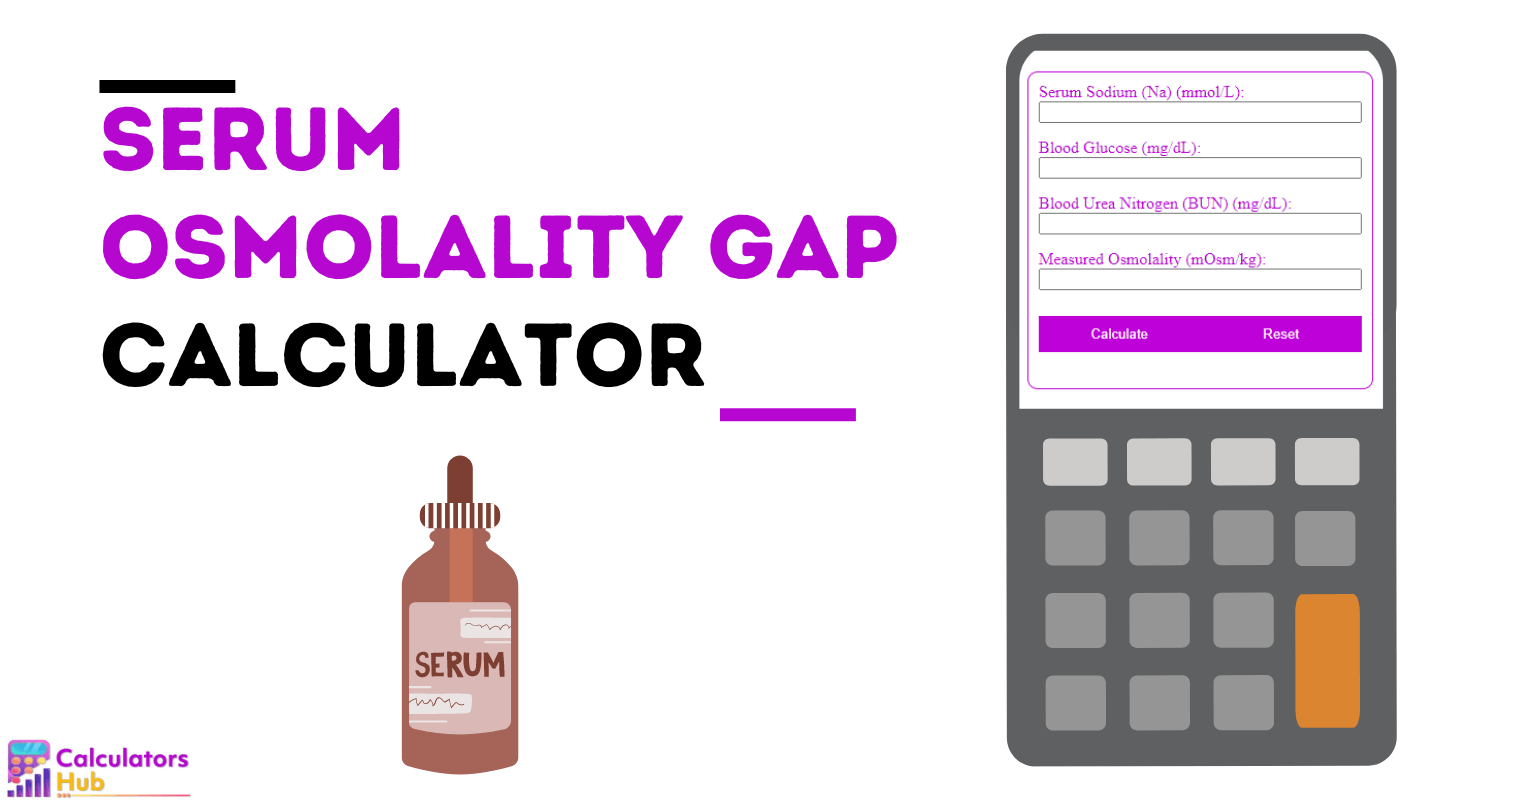 Serum Osmolality Gap Calculator